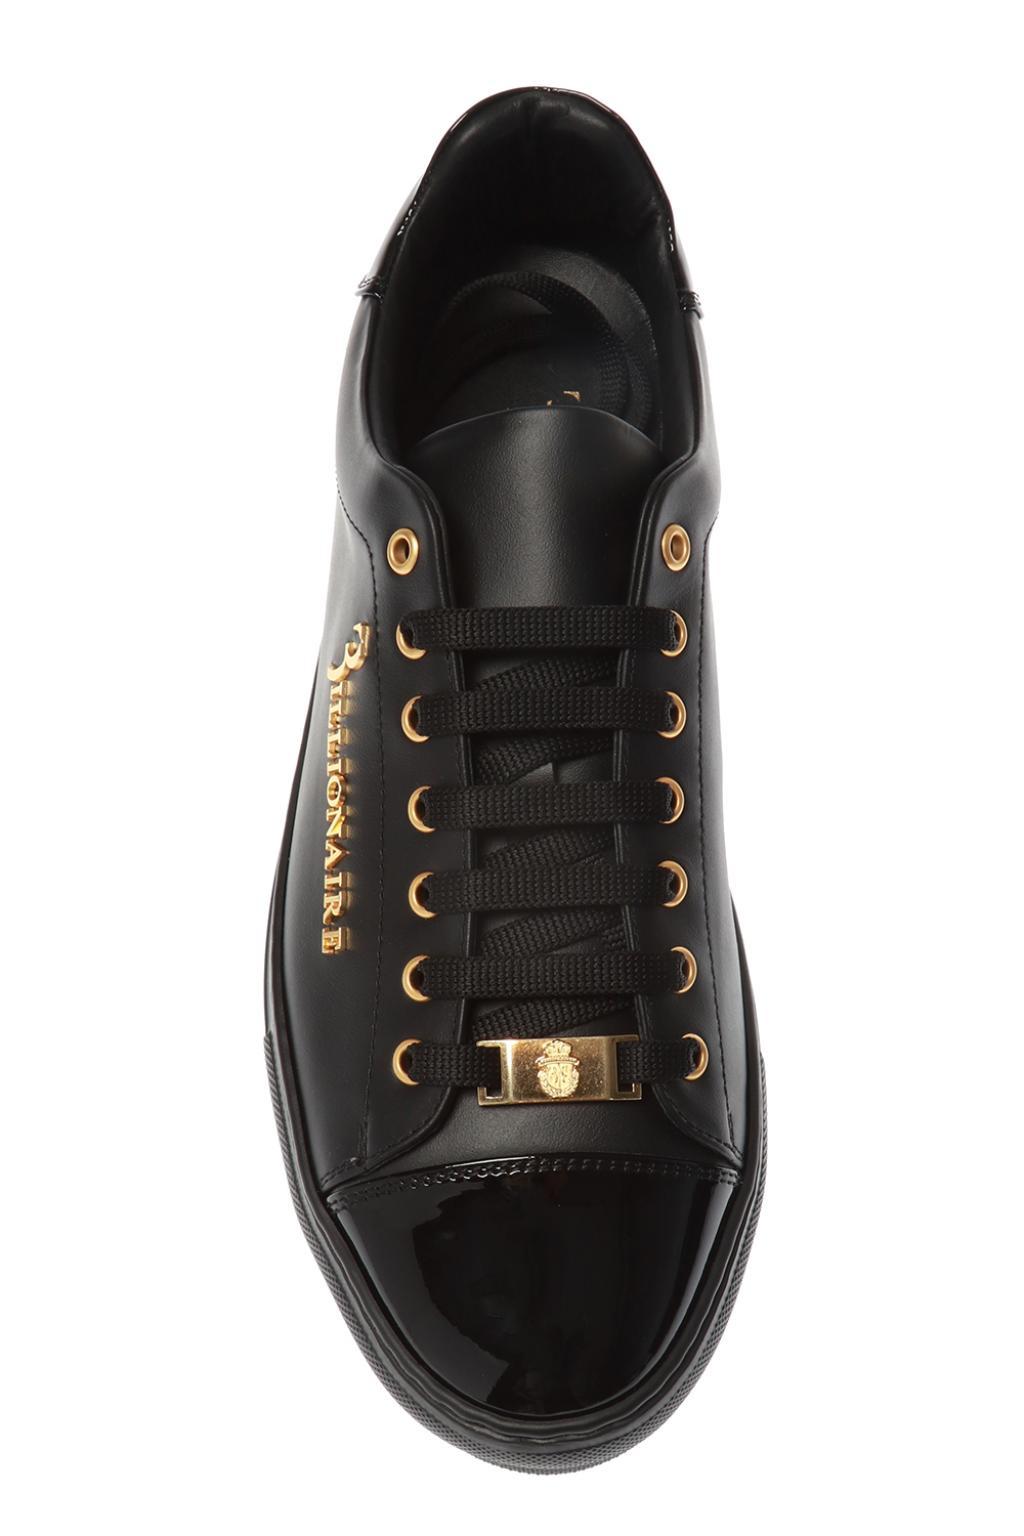 Billionaire Leather Branded Sneakers in Black for Men - Lyst